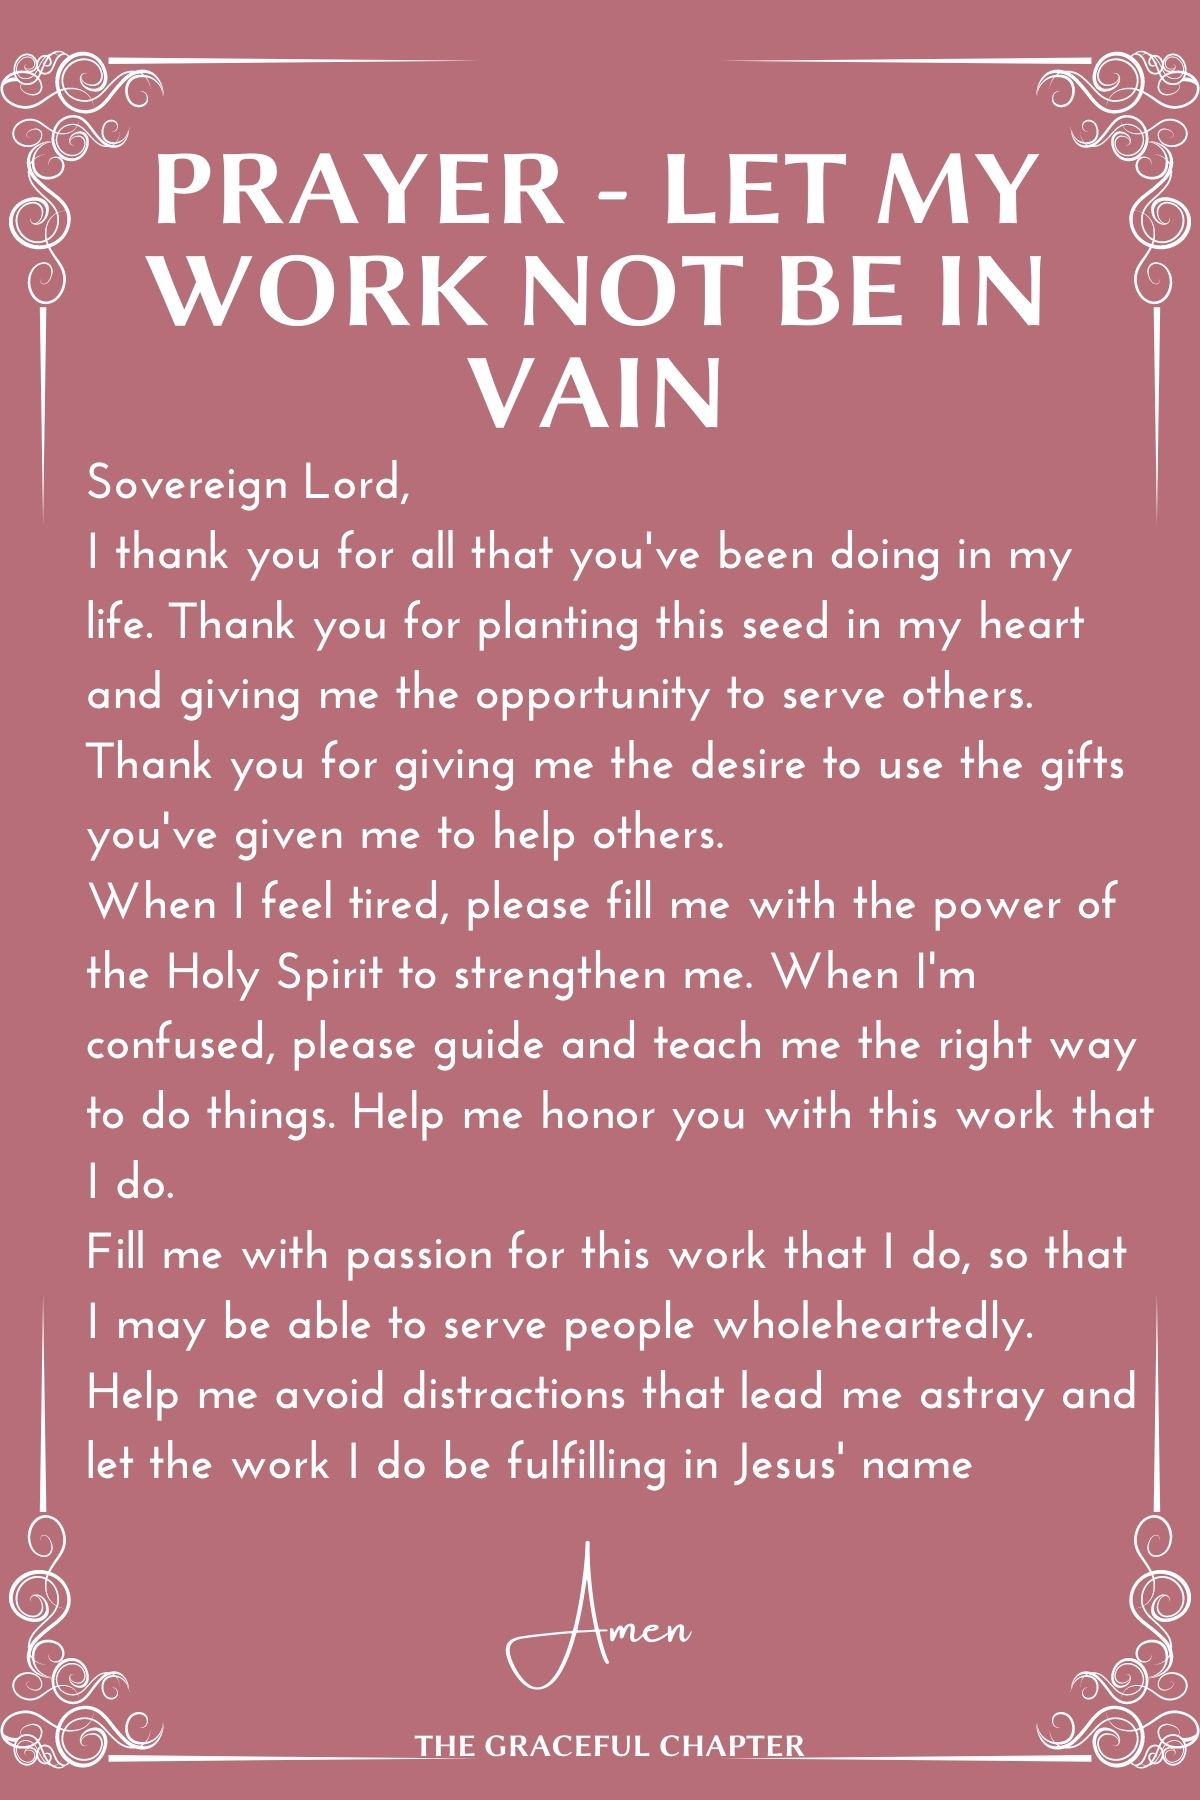 Prayer - Let my work not be in vain